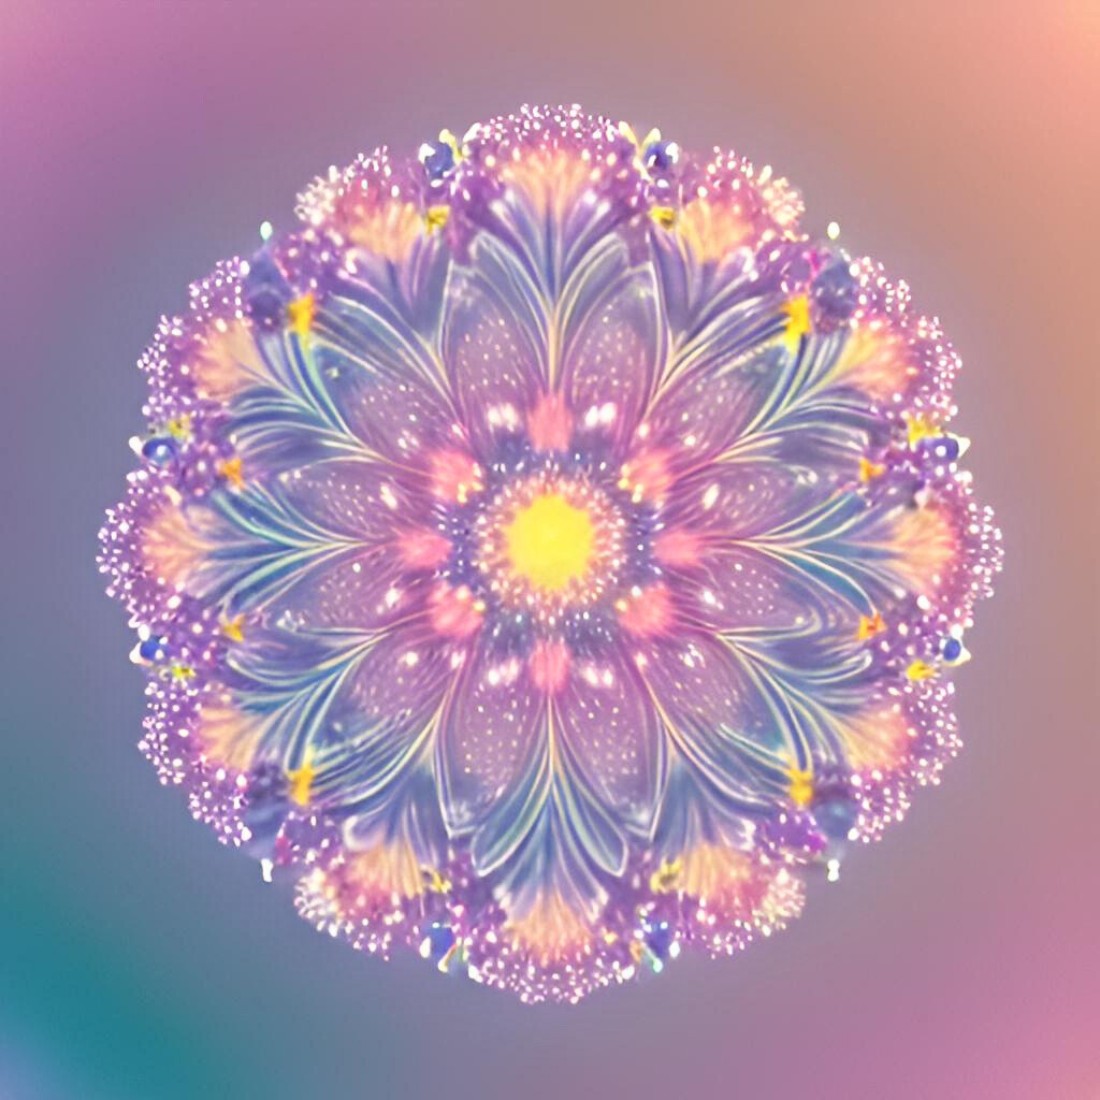 Flower Mandala preview image.